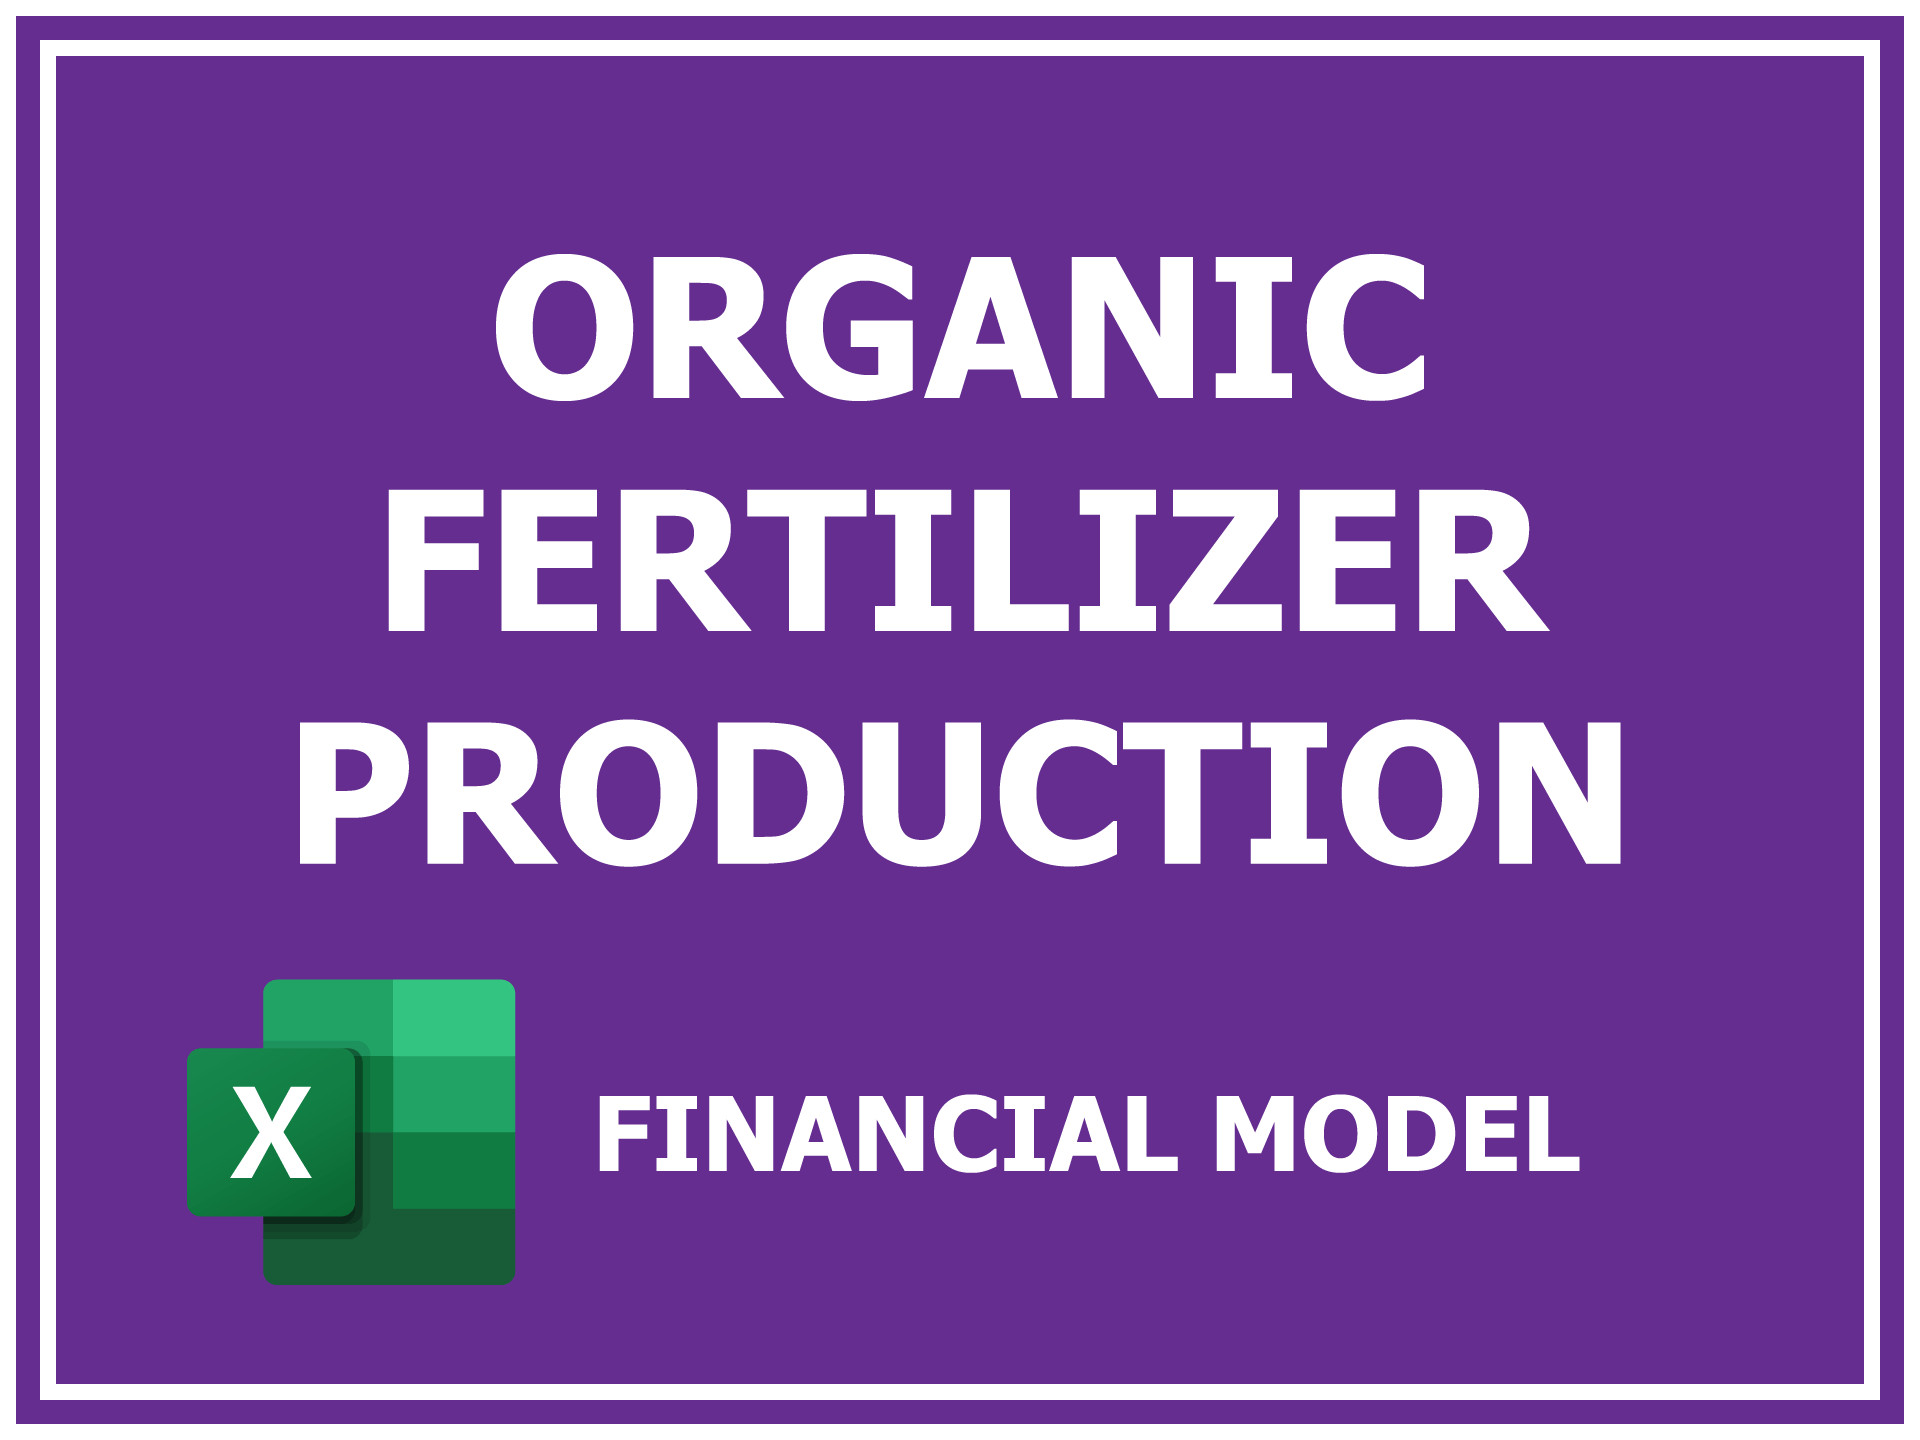 business plan of organic fertilizer